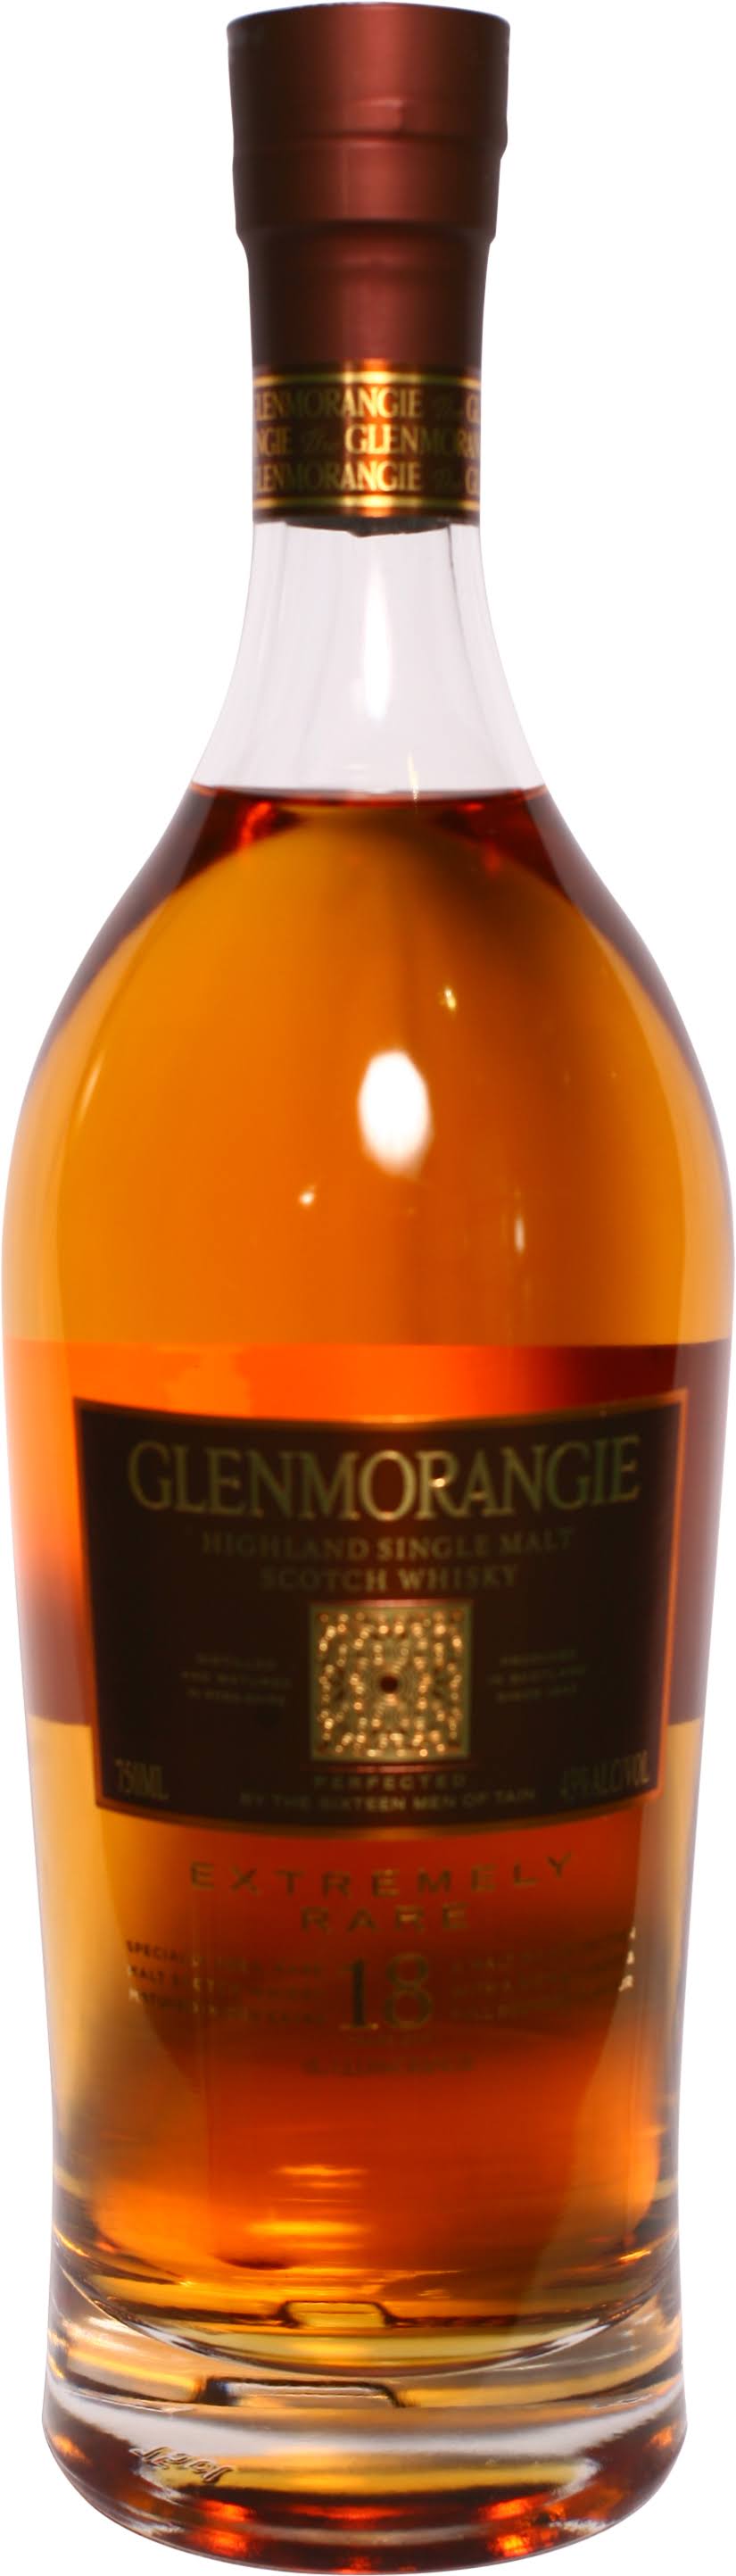 Glenmorangie 18yr Highland Single Malt Scotch Whisky